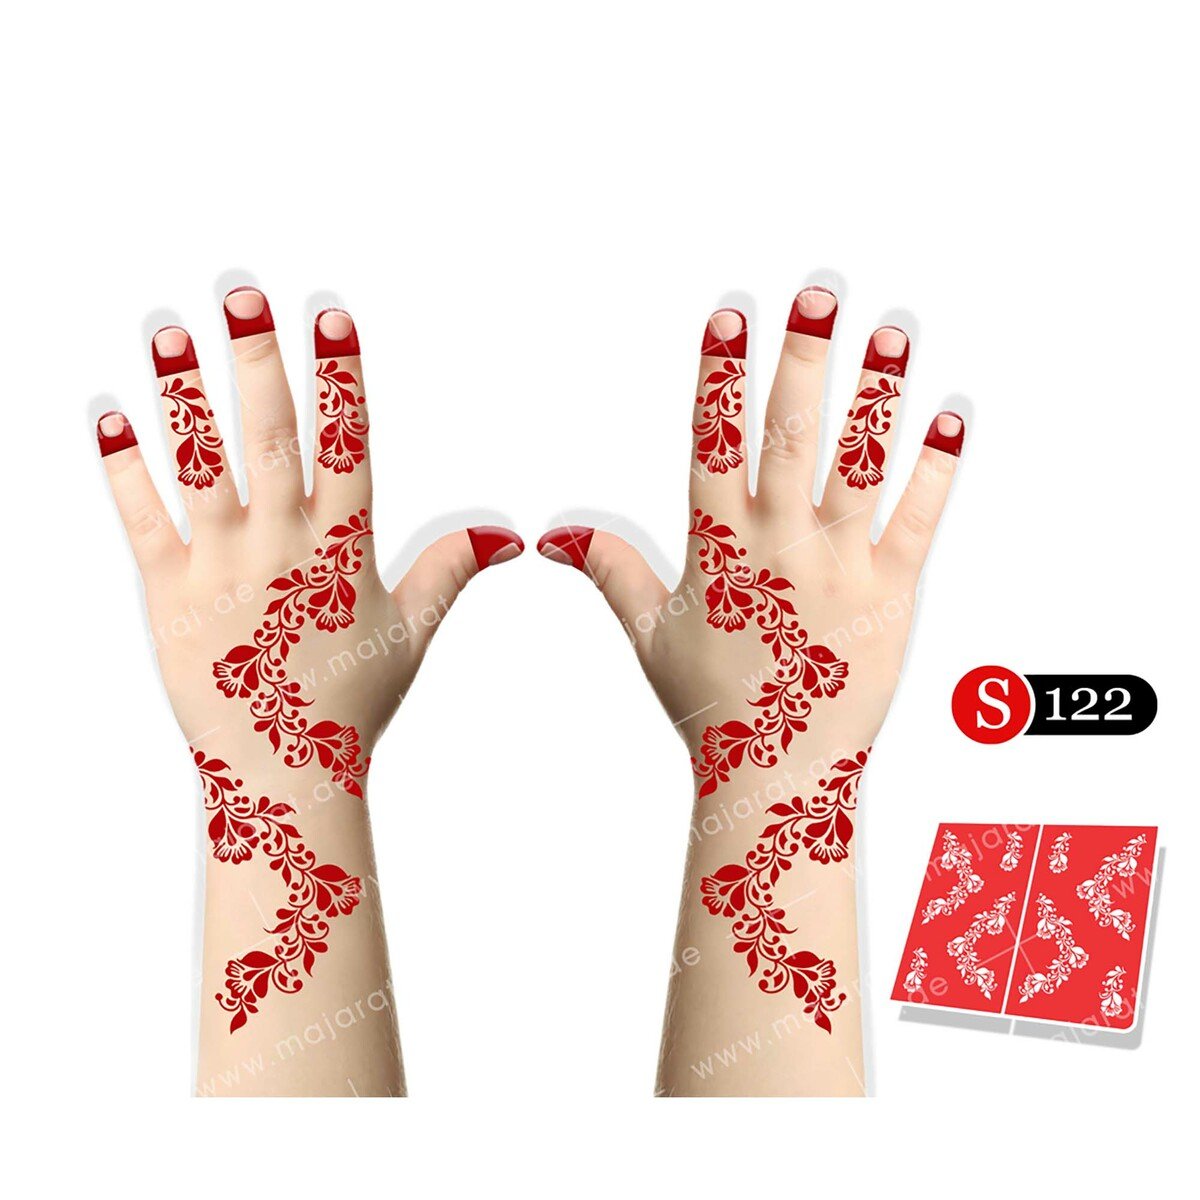 Majarat Henna Design Sticker Small S122 18x15cm